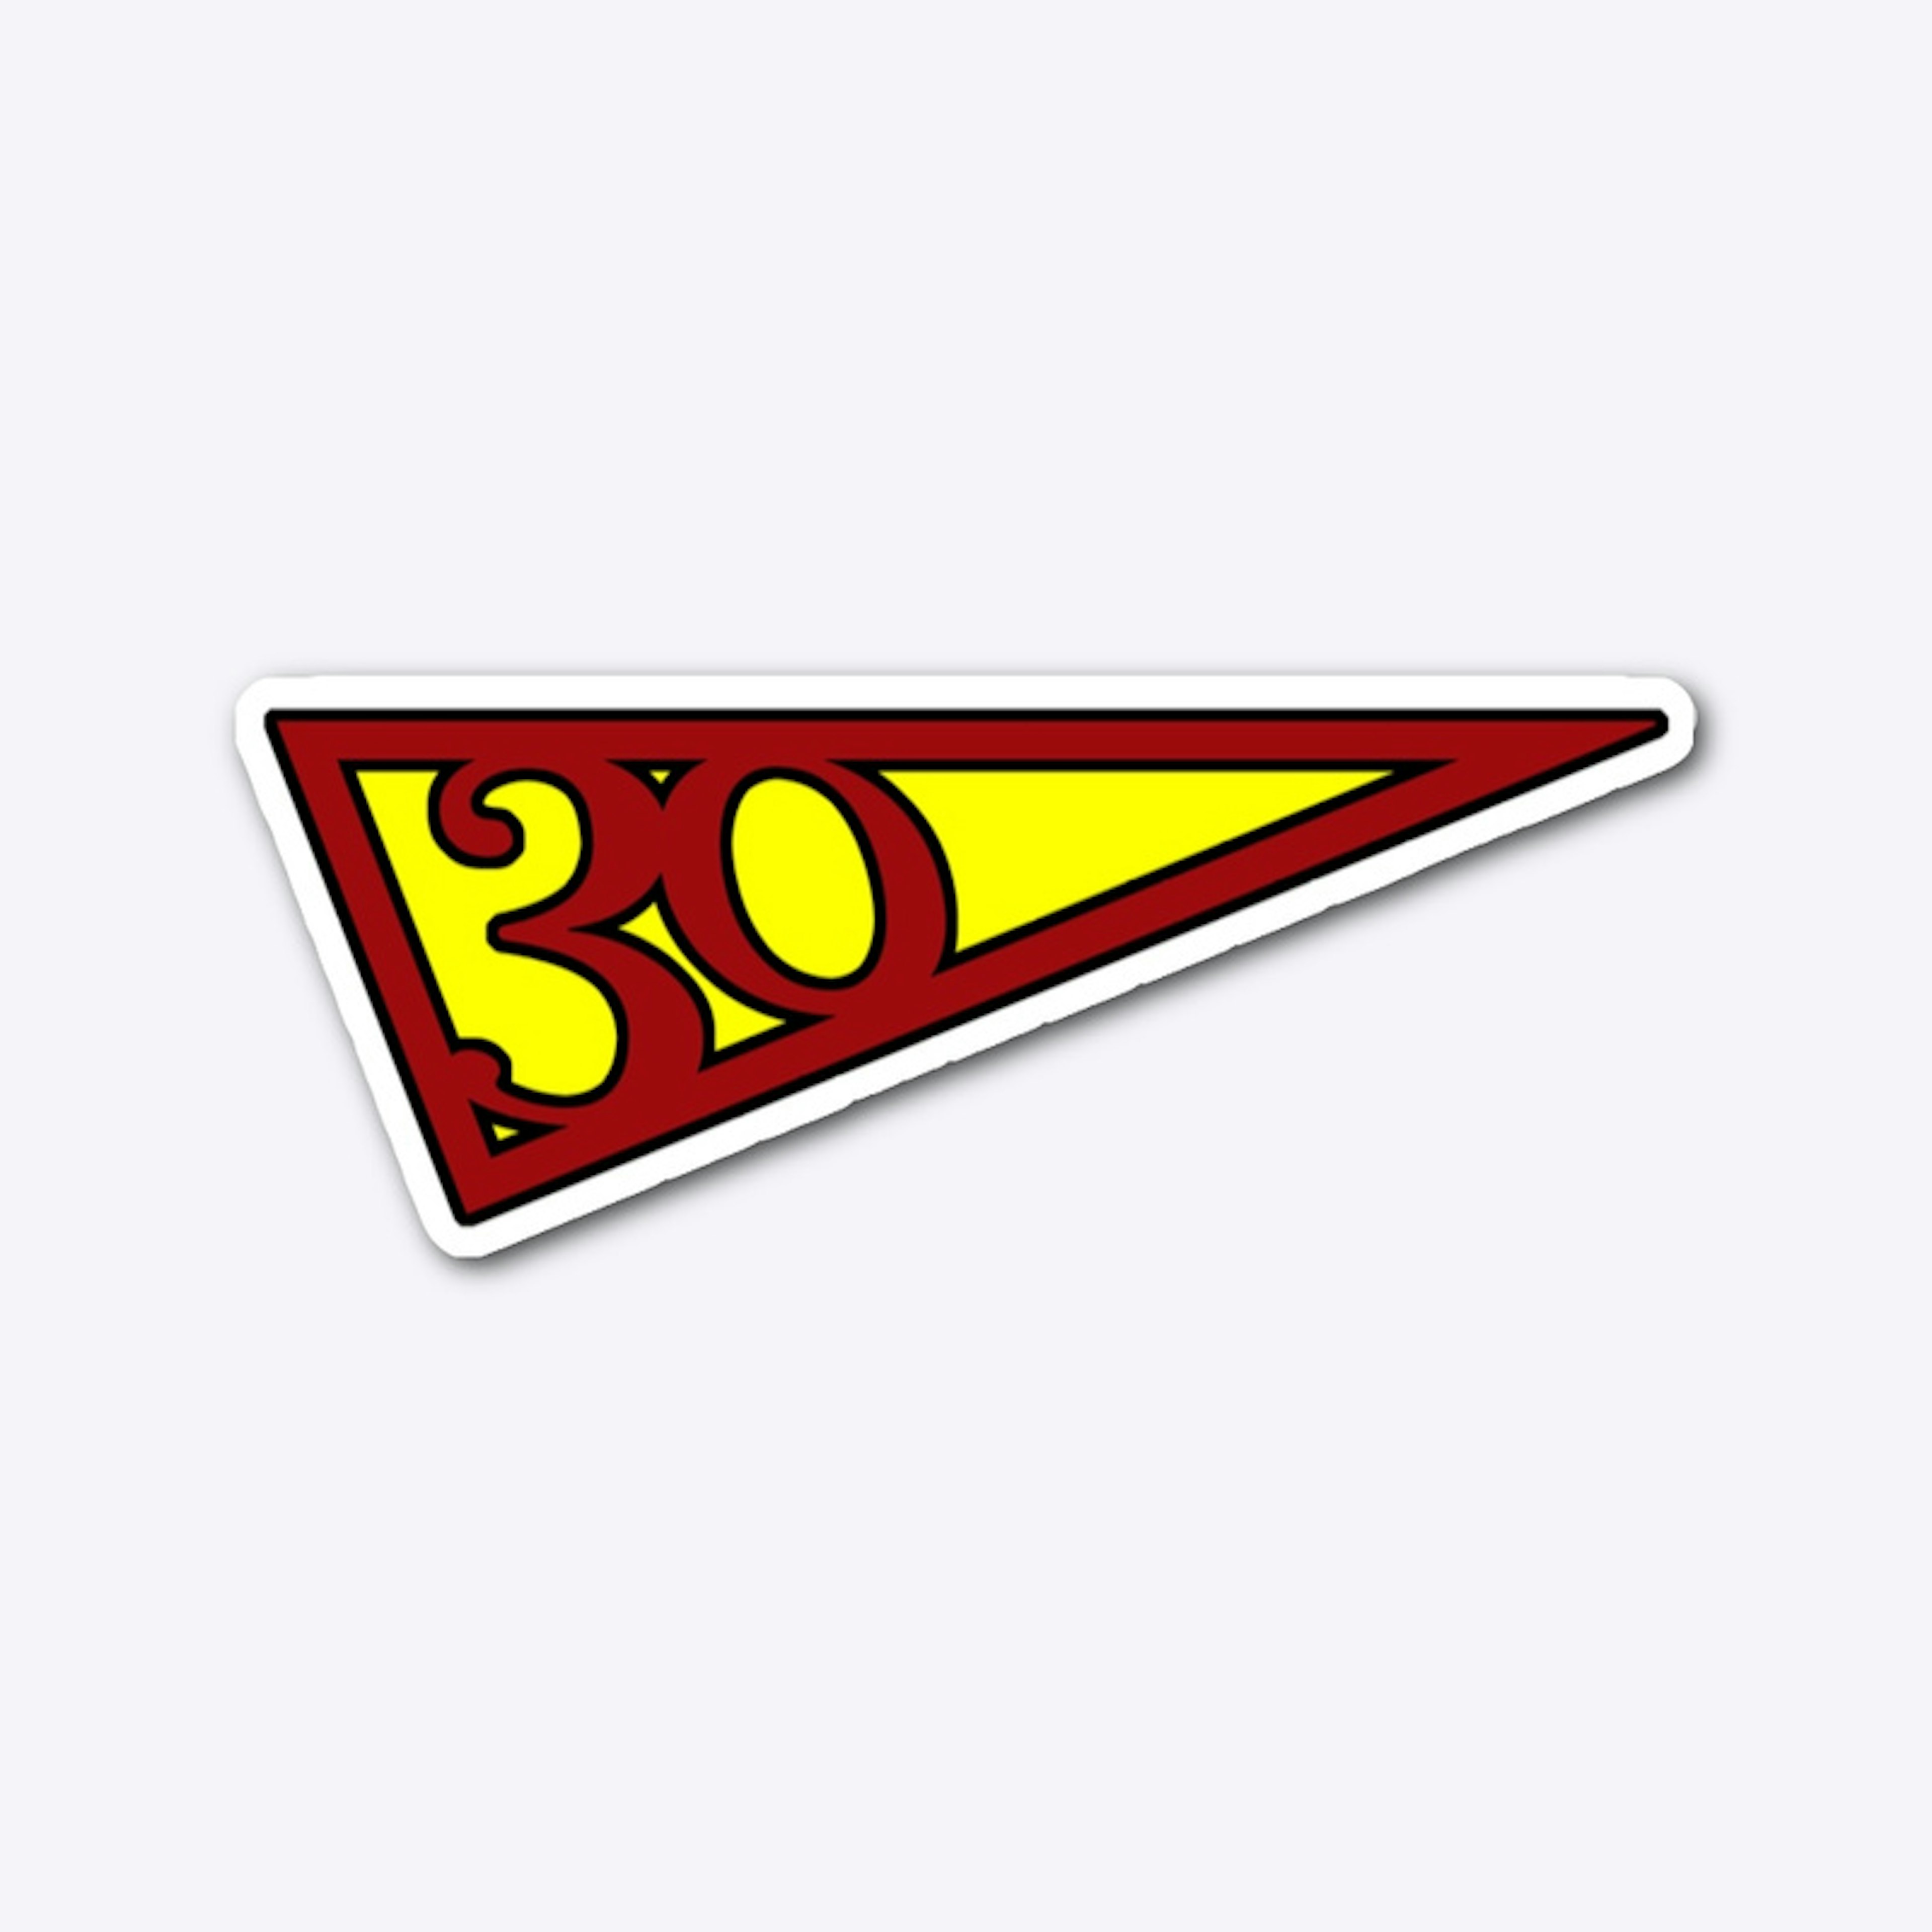 Superhero Triangle 30 - Numberphile